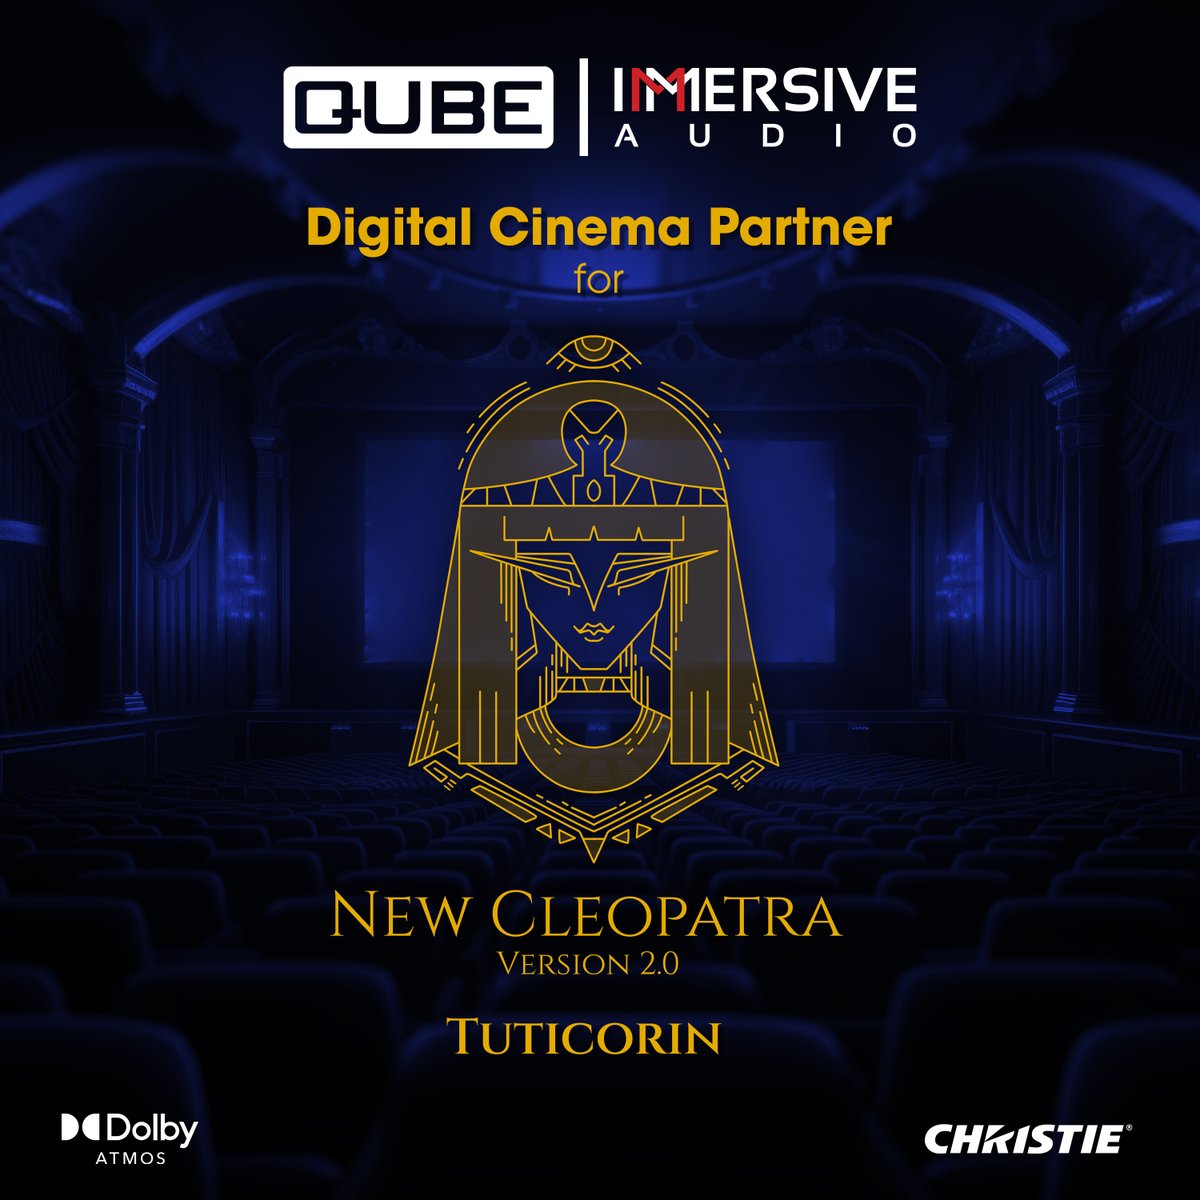 Tuticorin's New Cleopatra theatre partners with Qube Cinema #ImmersiveAudio for digital cinema integration services.

#projection #audio #dolbyatmos #christie #theatre #movie #cinema